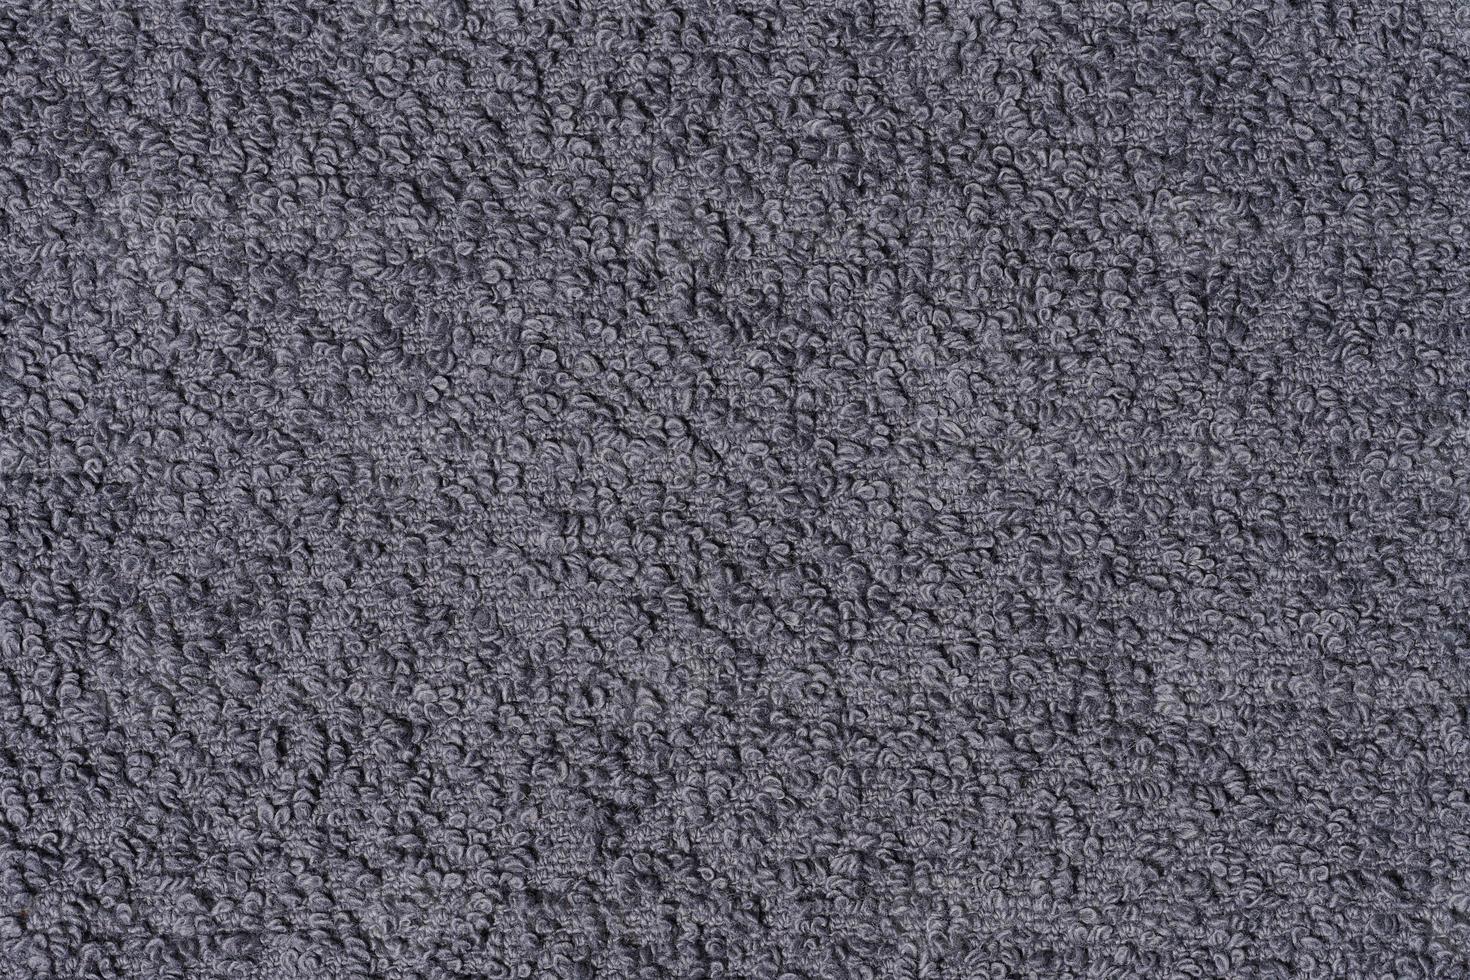 Texture of a gray terry cotton towel, canvas. Macro photo